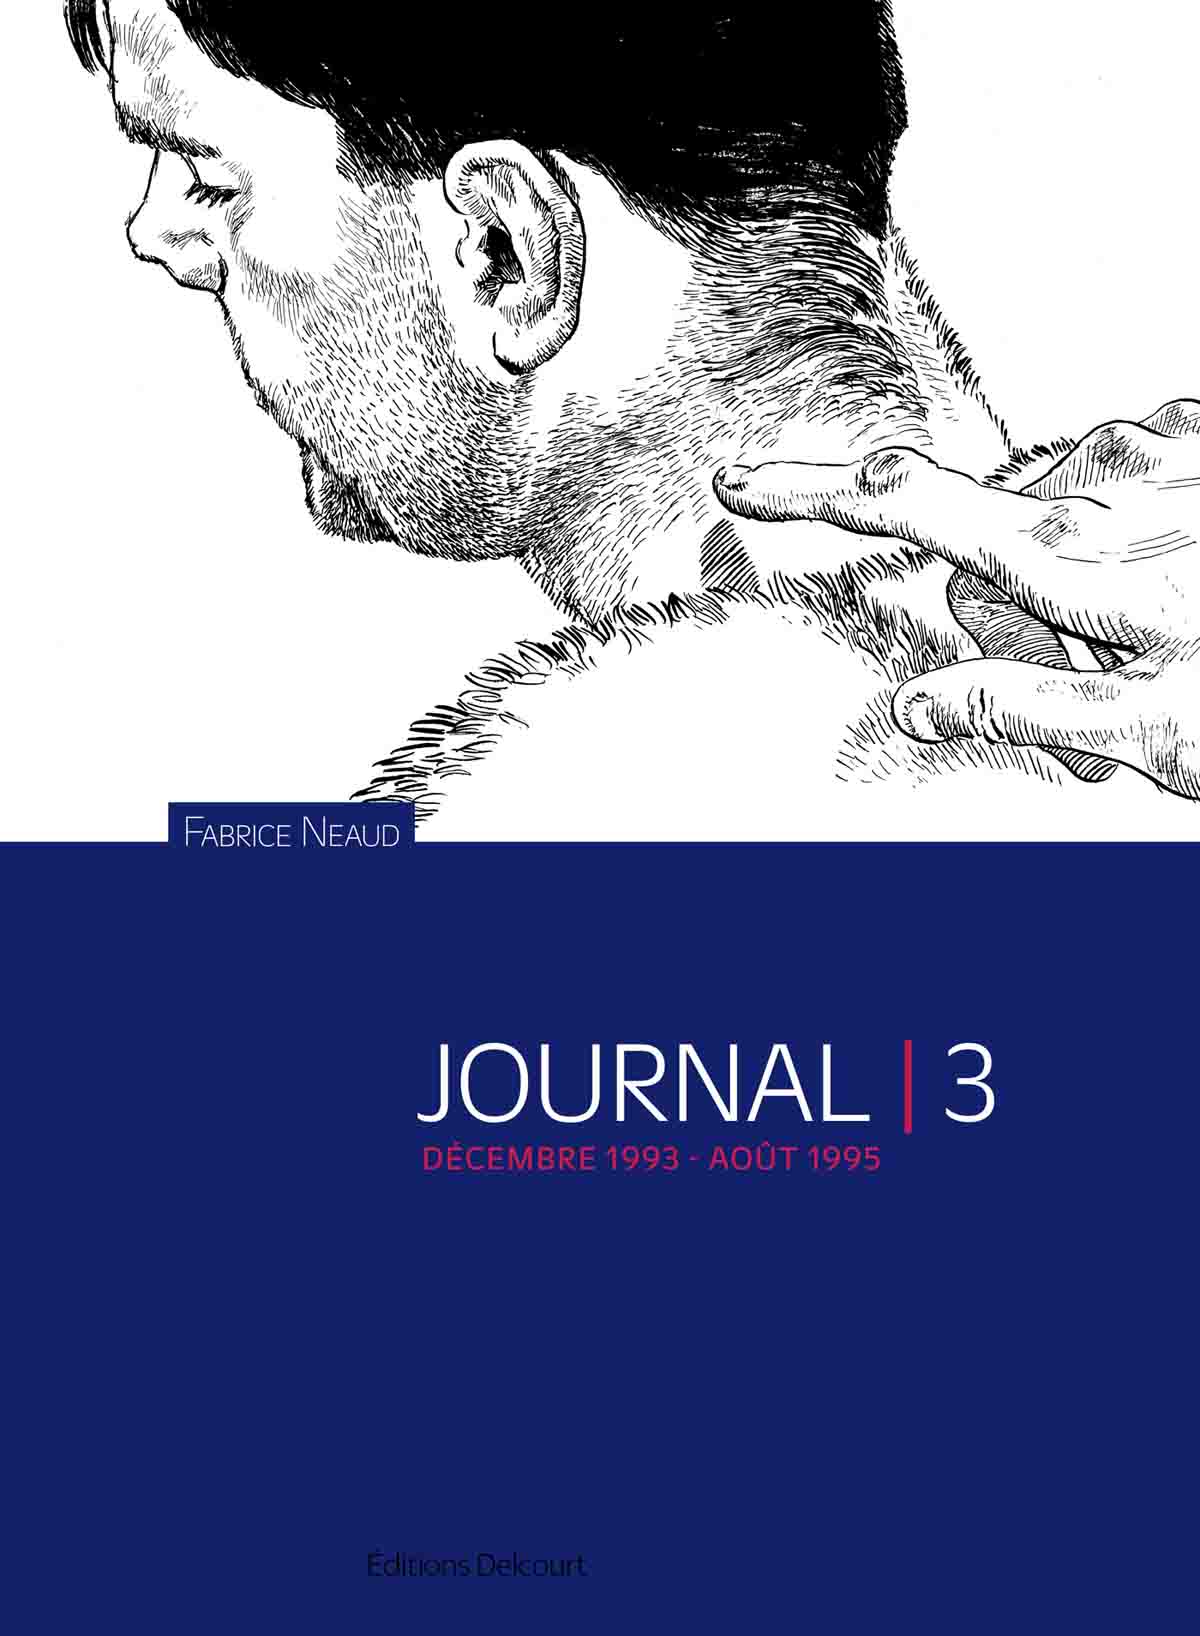 Journal 3 – Fabrice Neaud